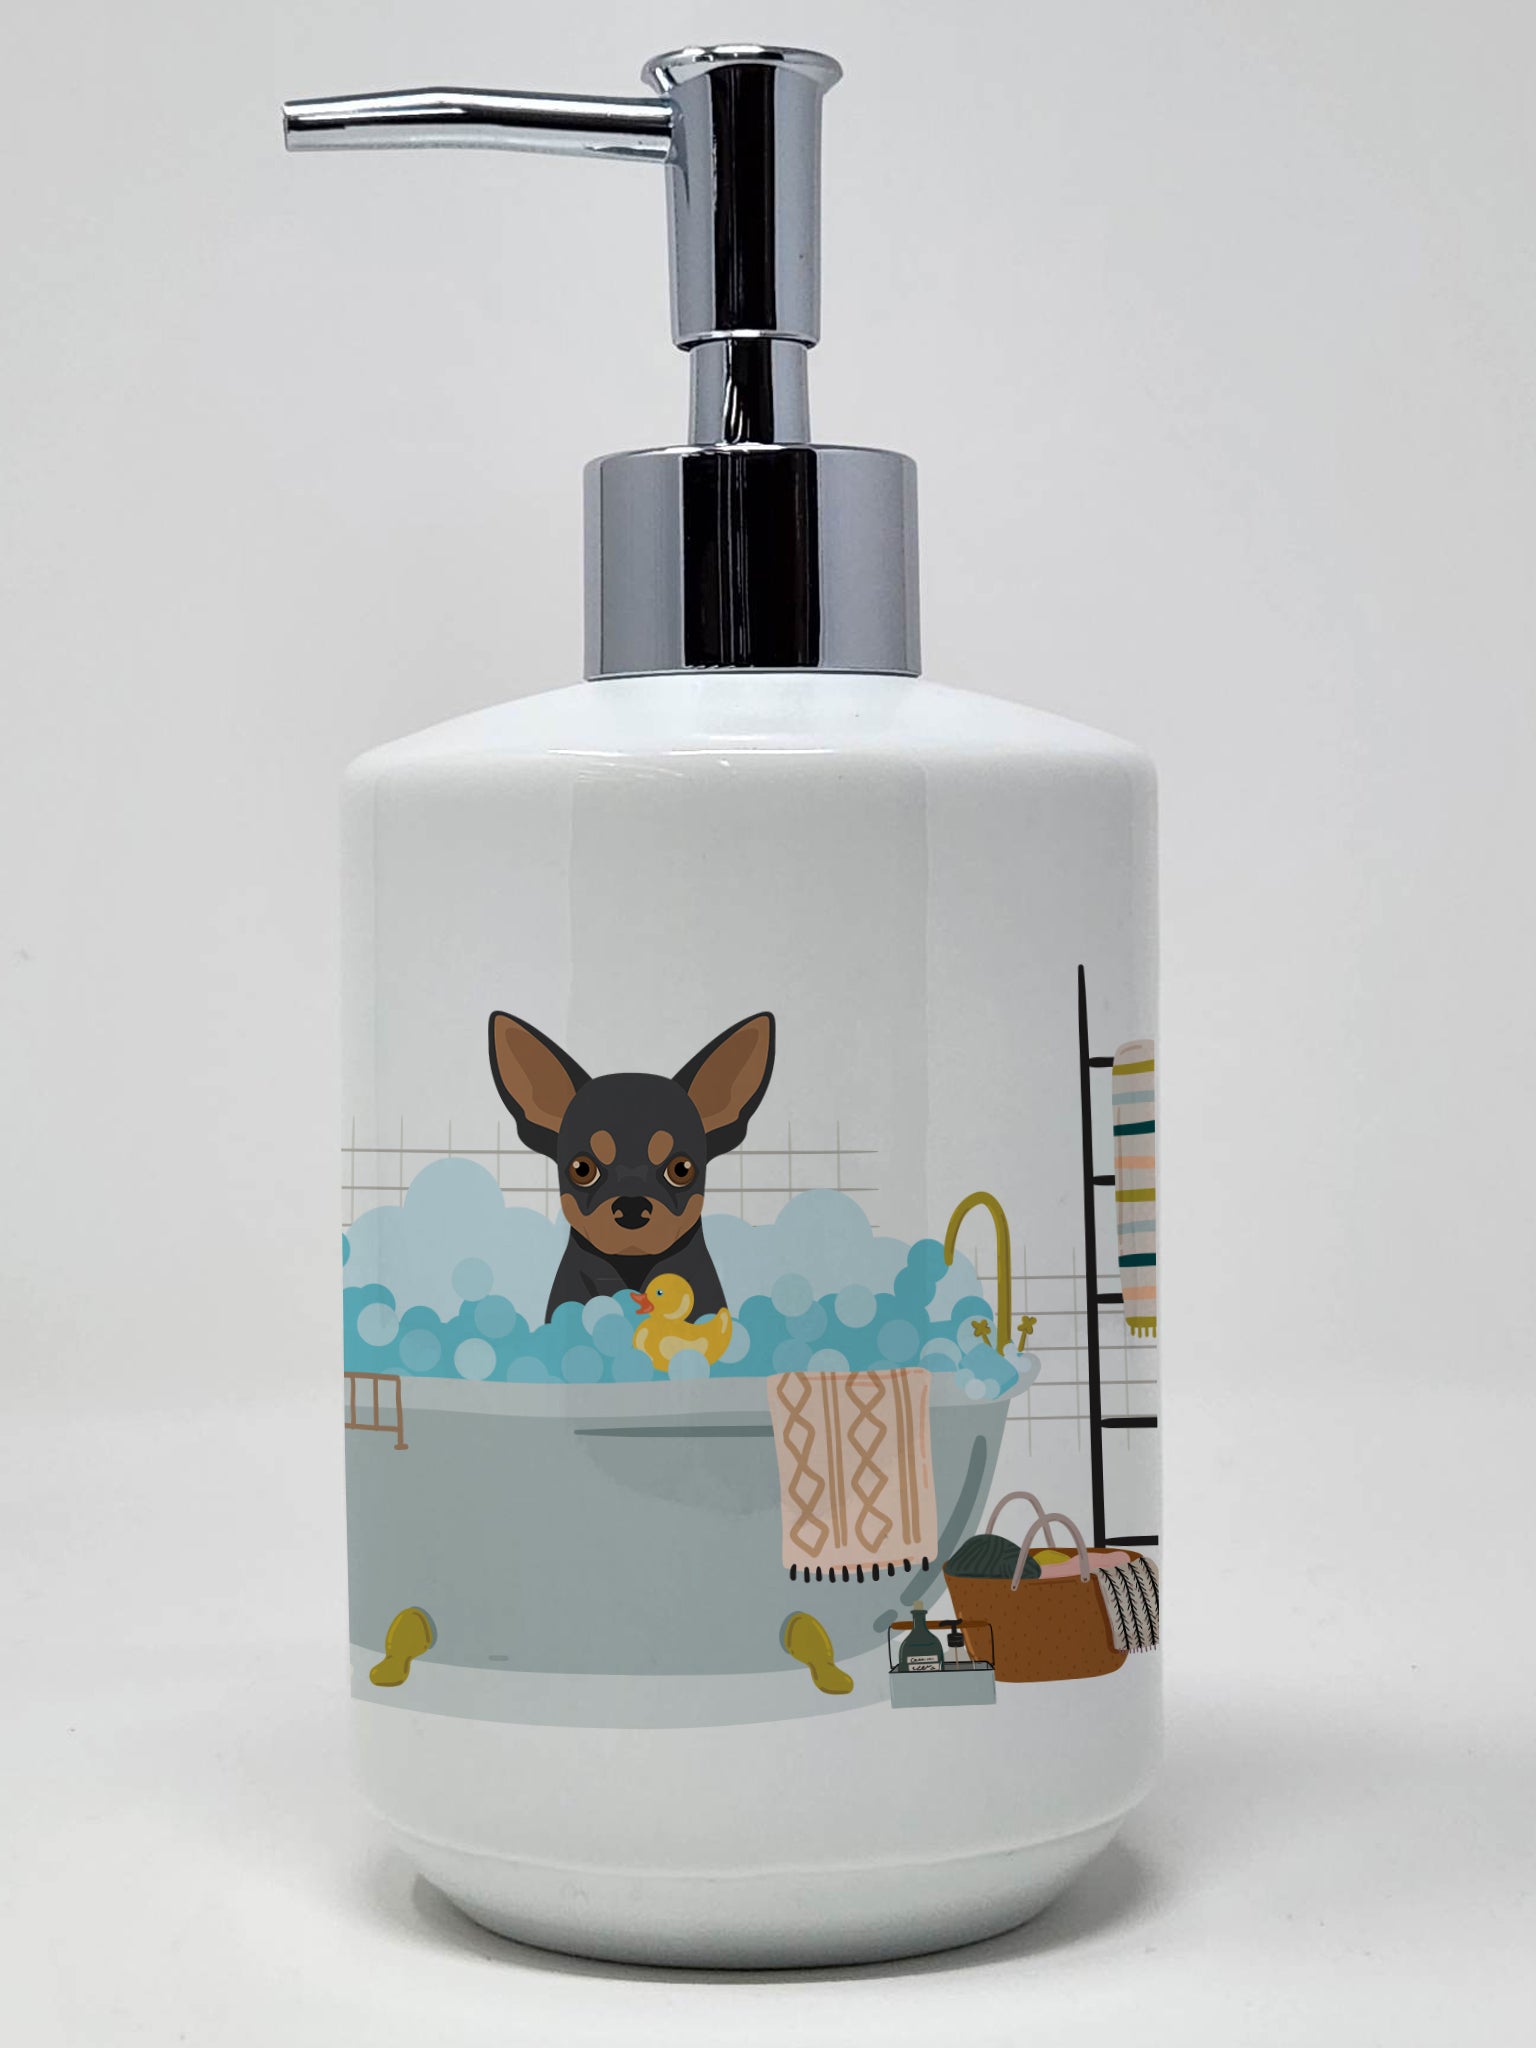 Buy this Black and Tan Chihuahua Ceramic Soap Dispenser